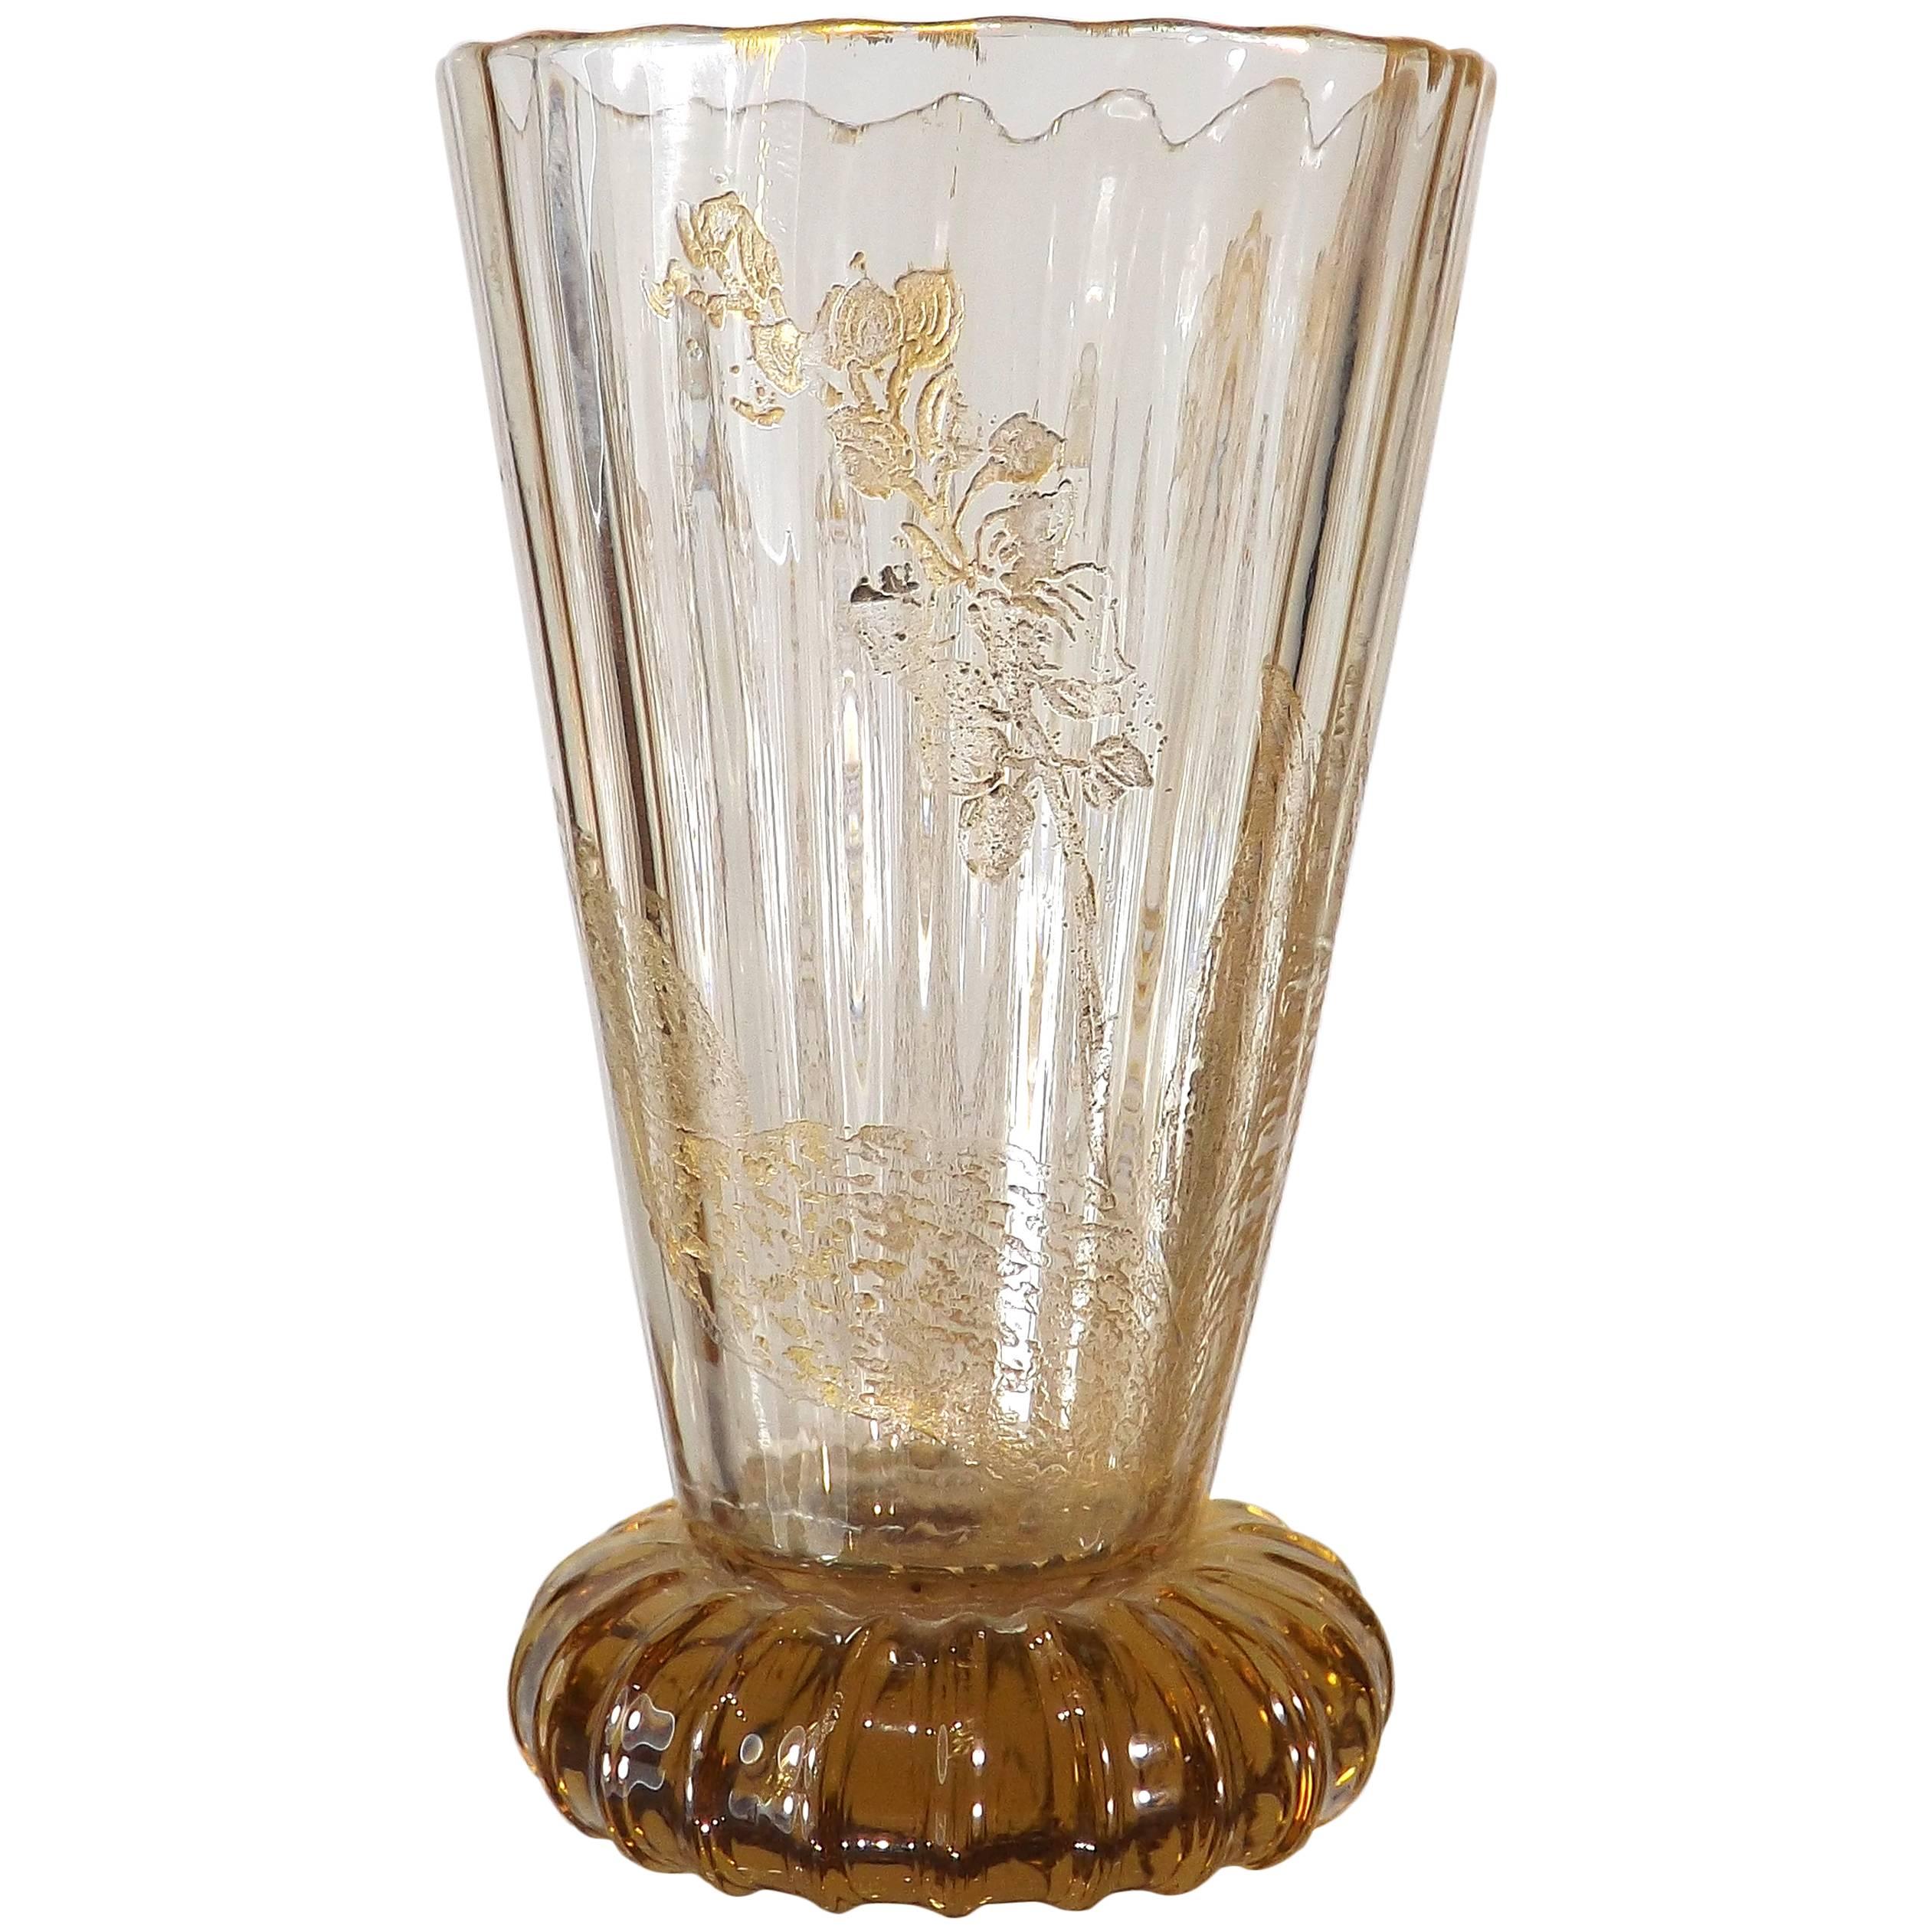 Intaglio Gilt Decorated Emile Gallé Cabinet Vase, circa 1880 For Sale